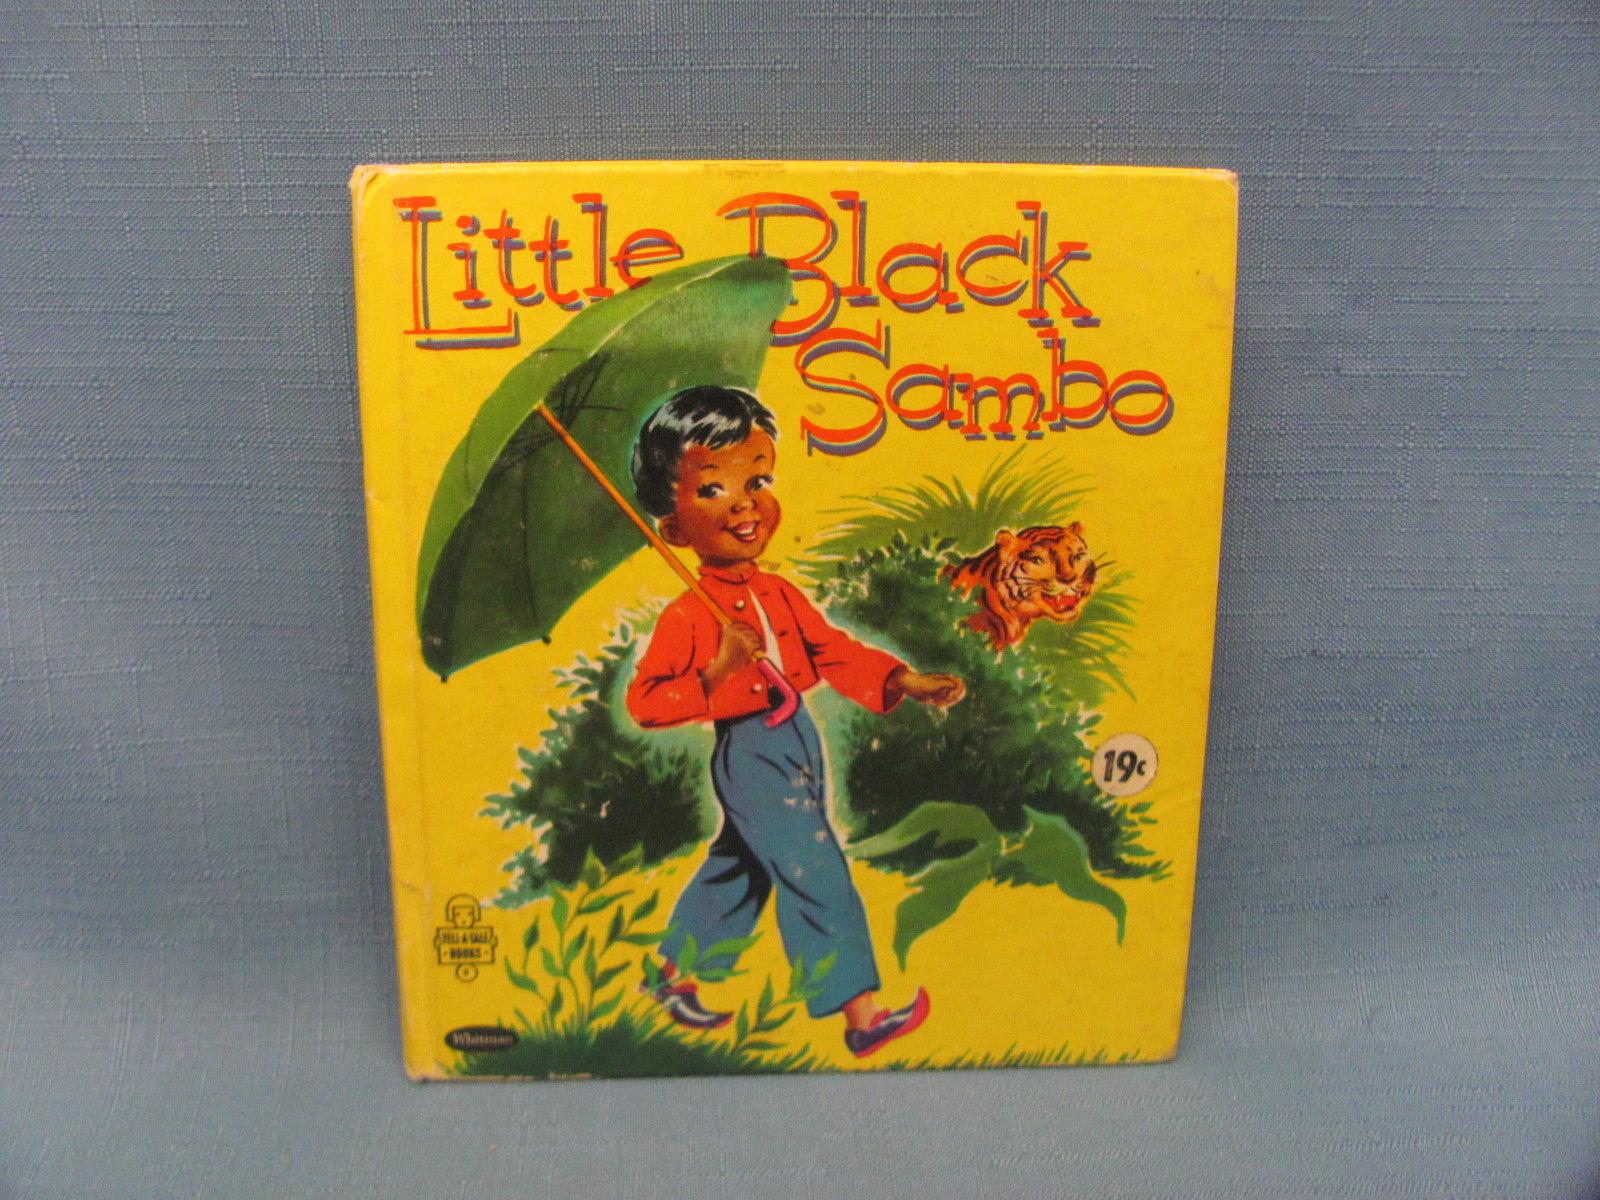 1953 Little Black Sambo Book – Whitman Publishing – Cover Wear/Tear on Seam